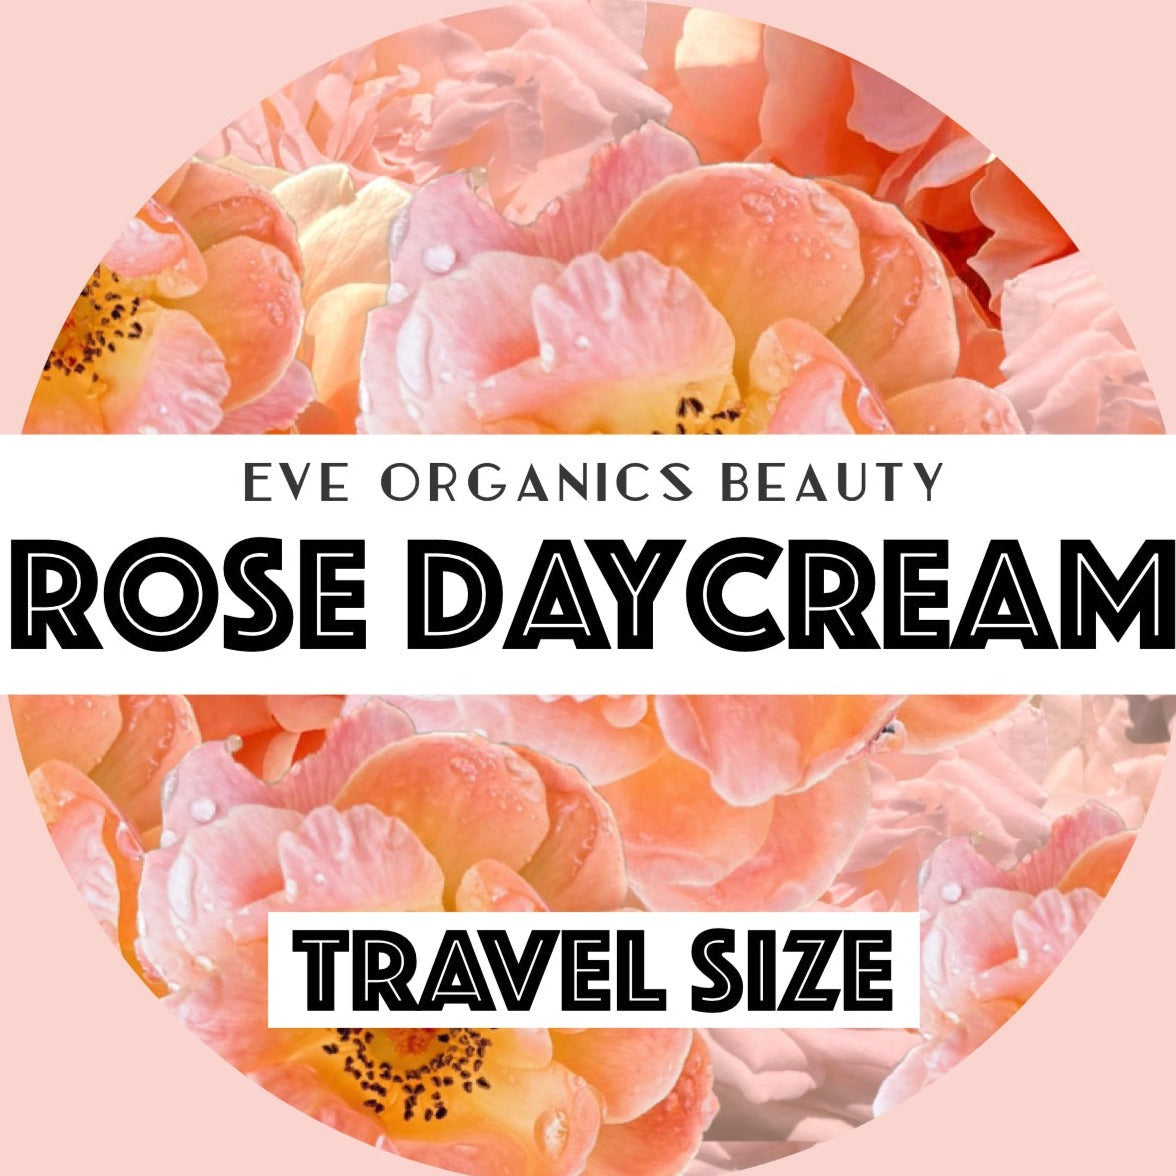 Rose Day Cream 1 oz TRAVEL SIZE